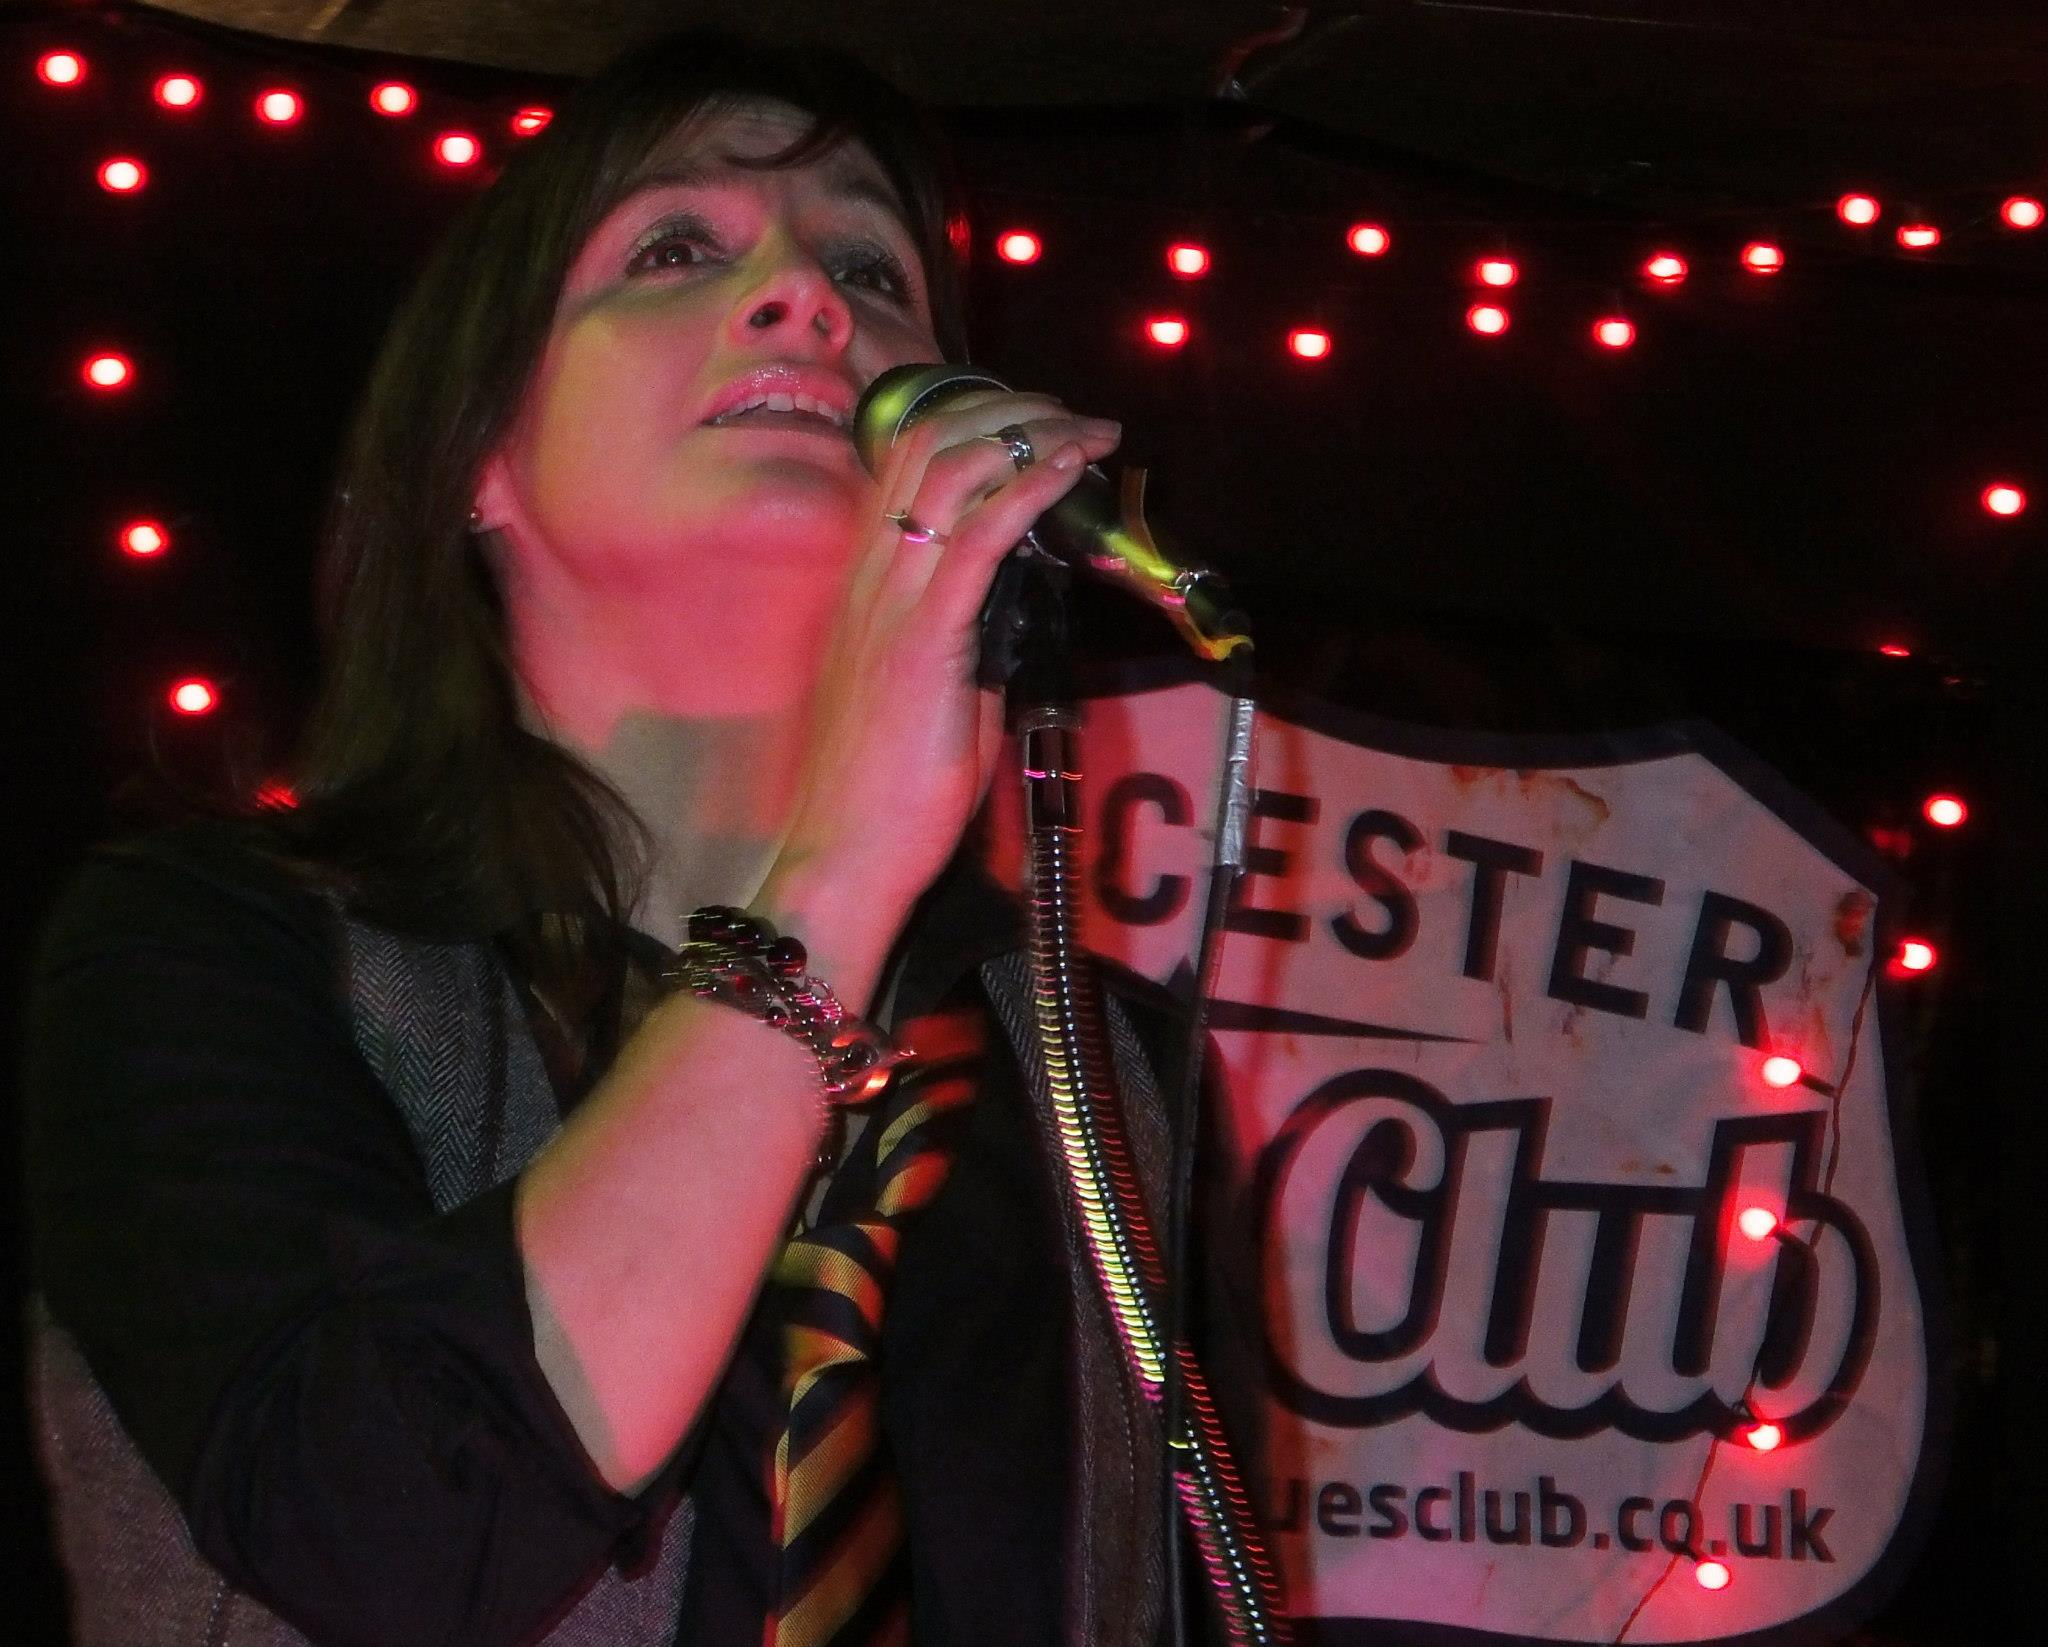 Gloucester Blues Club